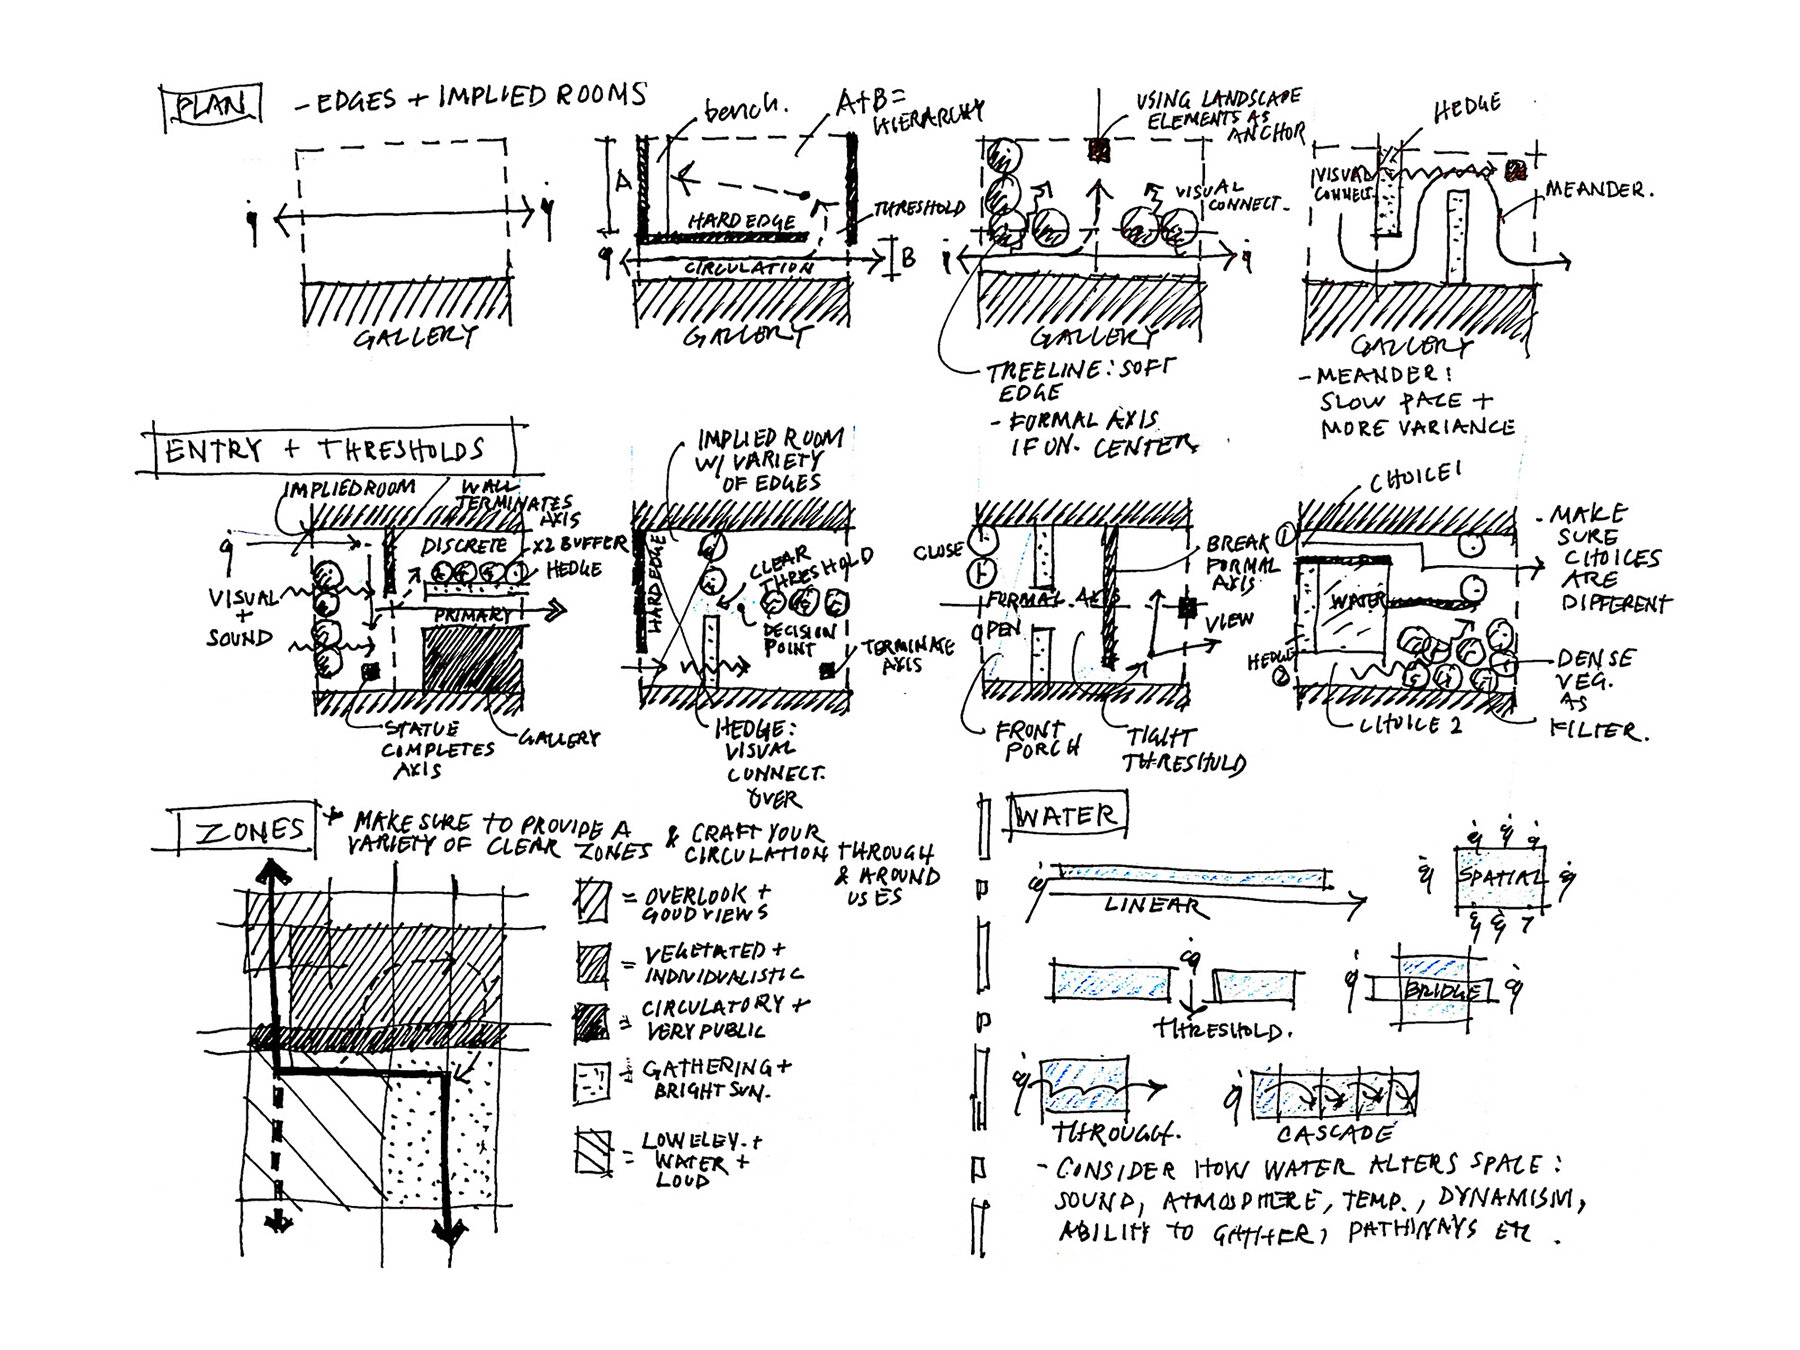 UMD_Course Planning_1_Garden Design Tips Sketch-edited.jpg